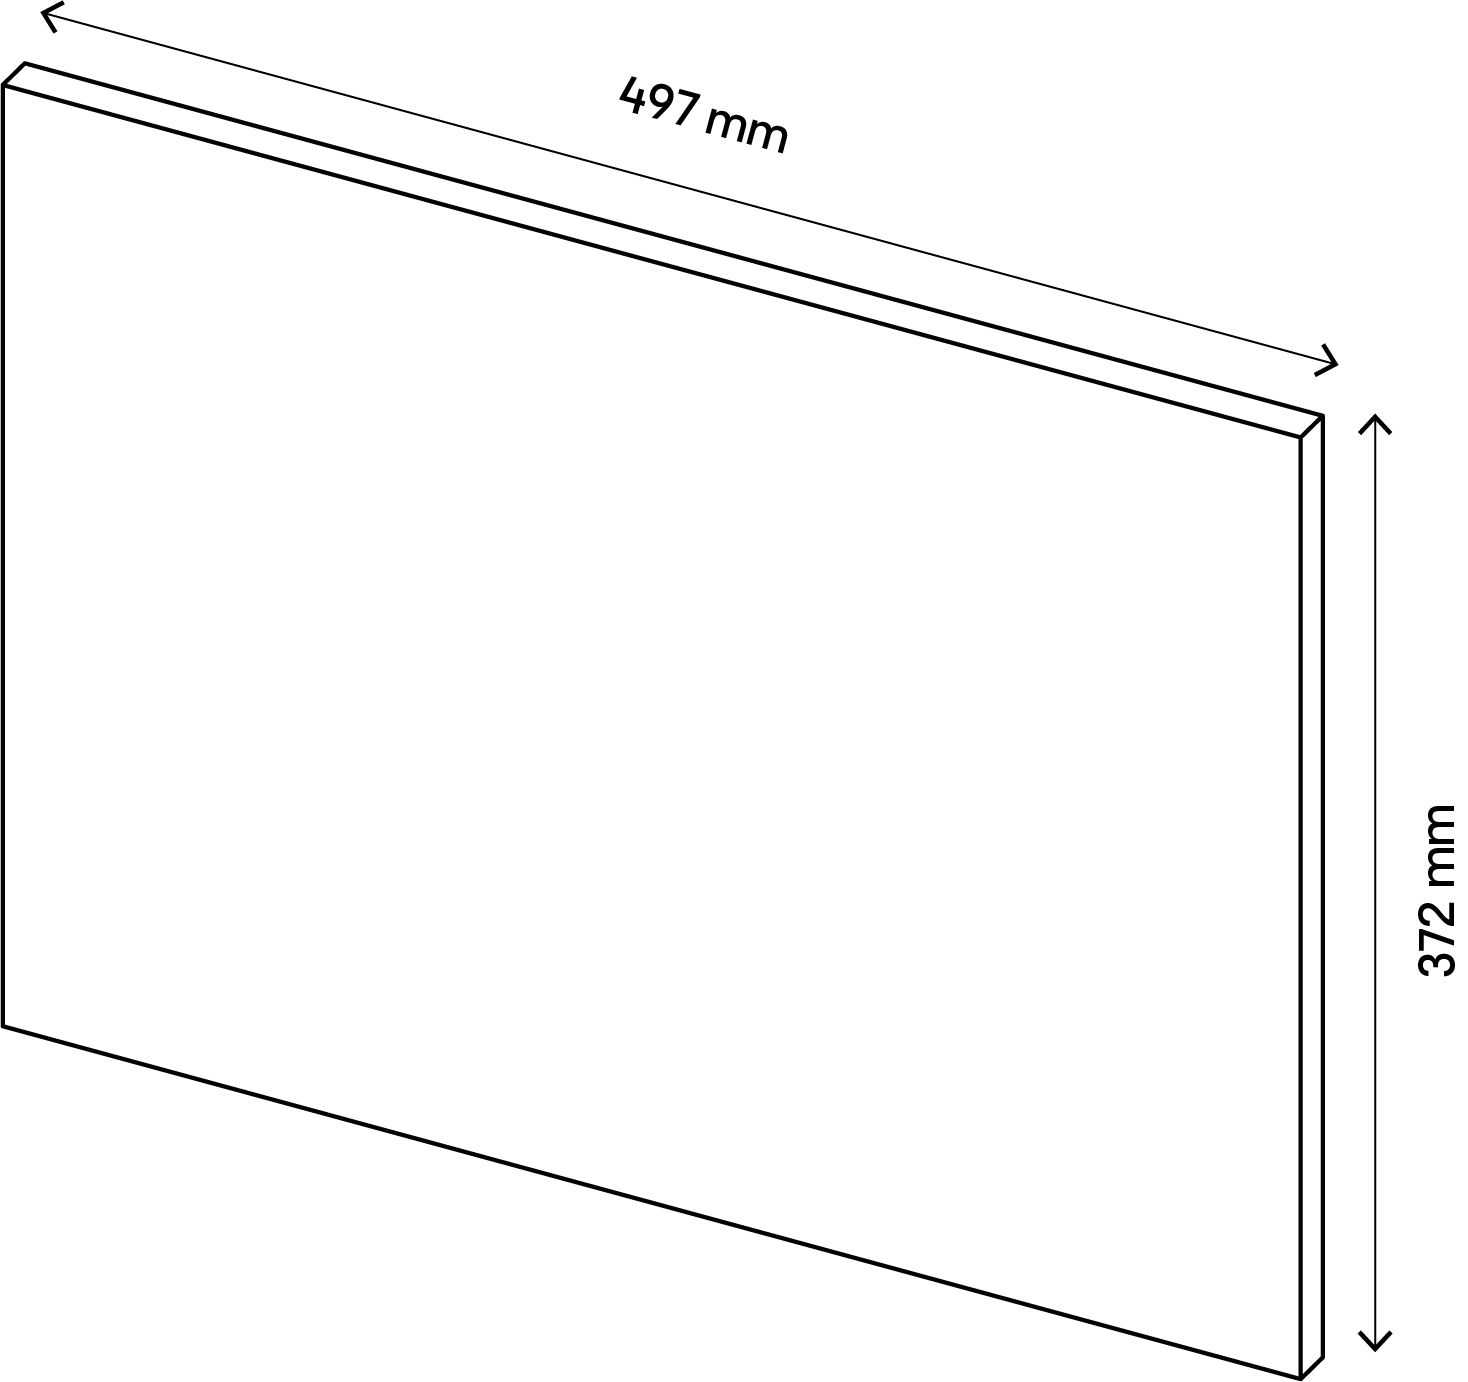 GoodHome Atomia Matt Anthracite Non-mirrored Modular furniture door, (H) 372mm (W) 497mm